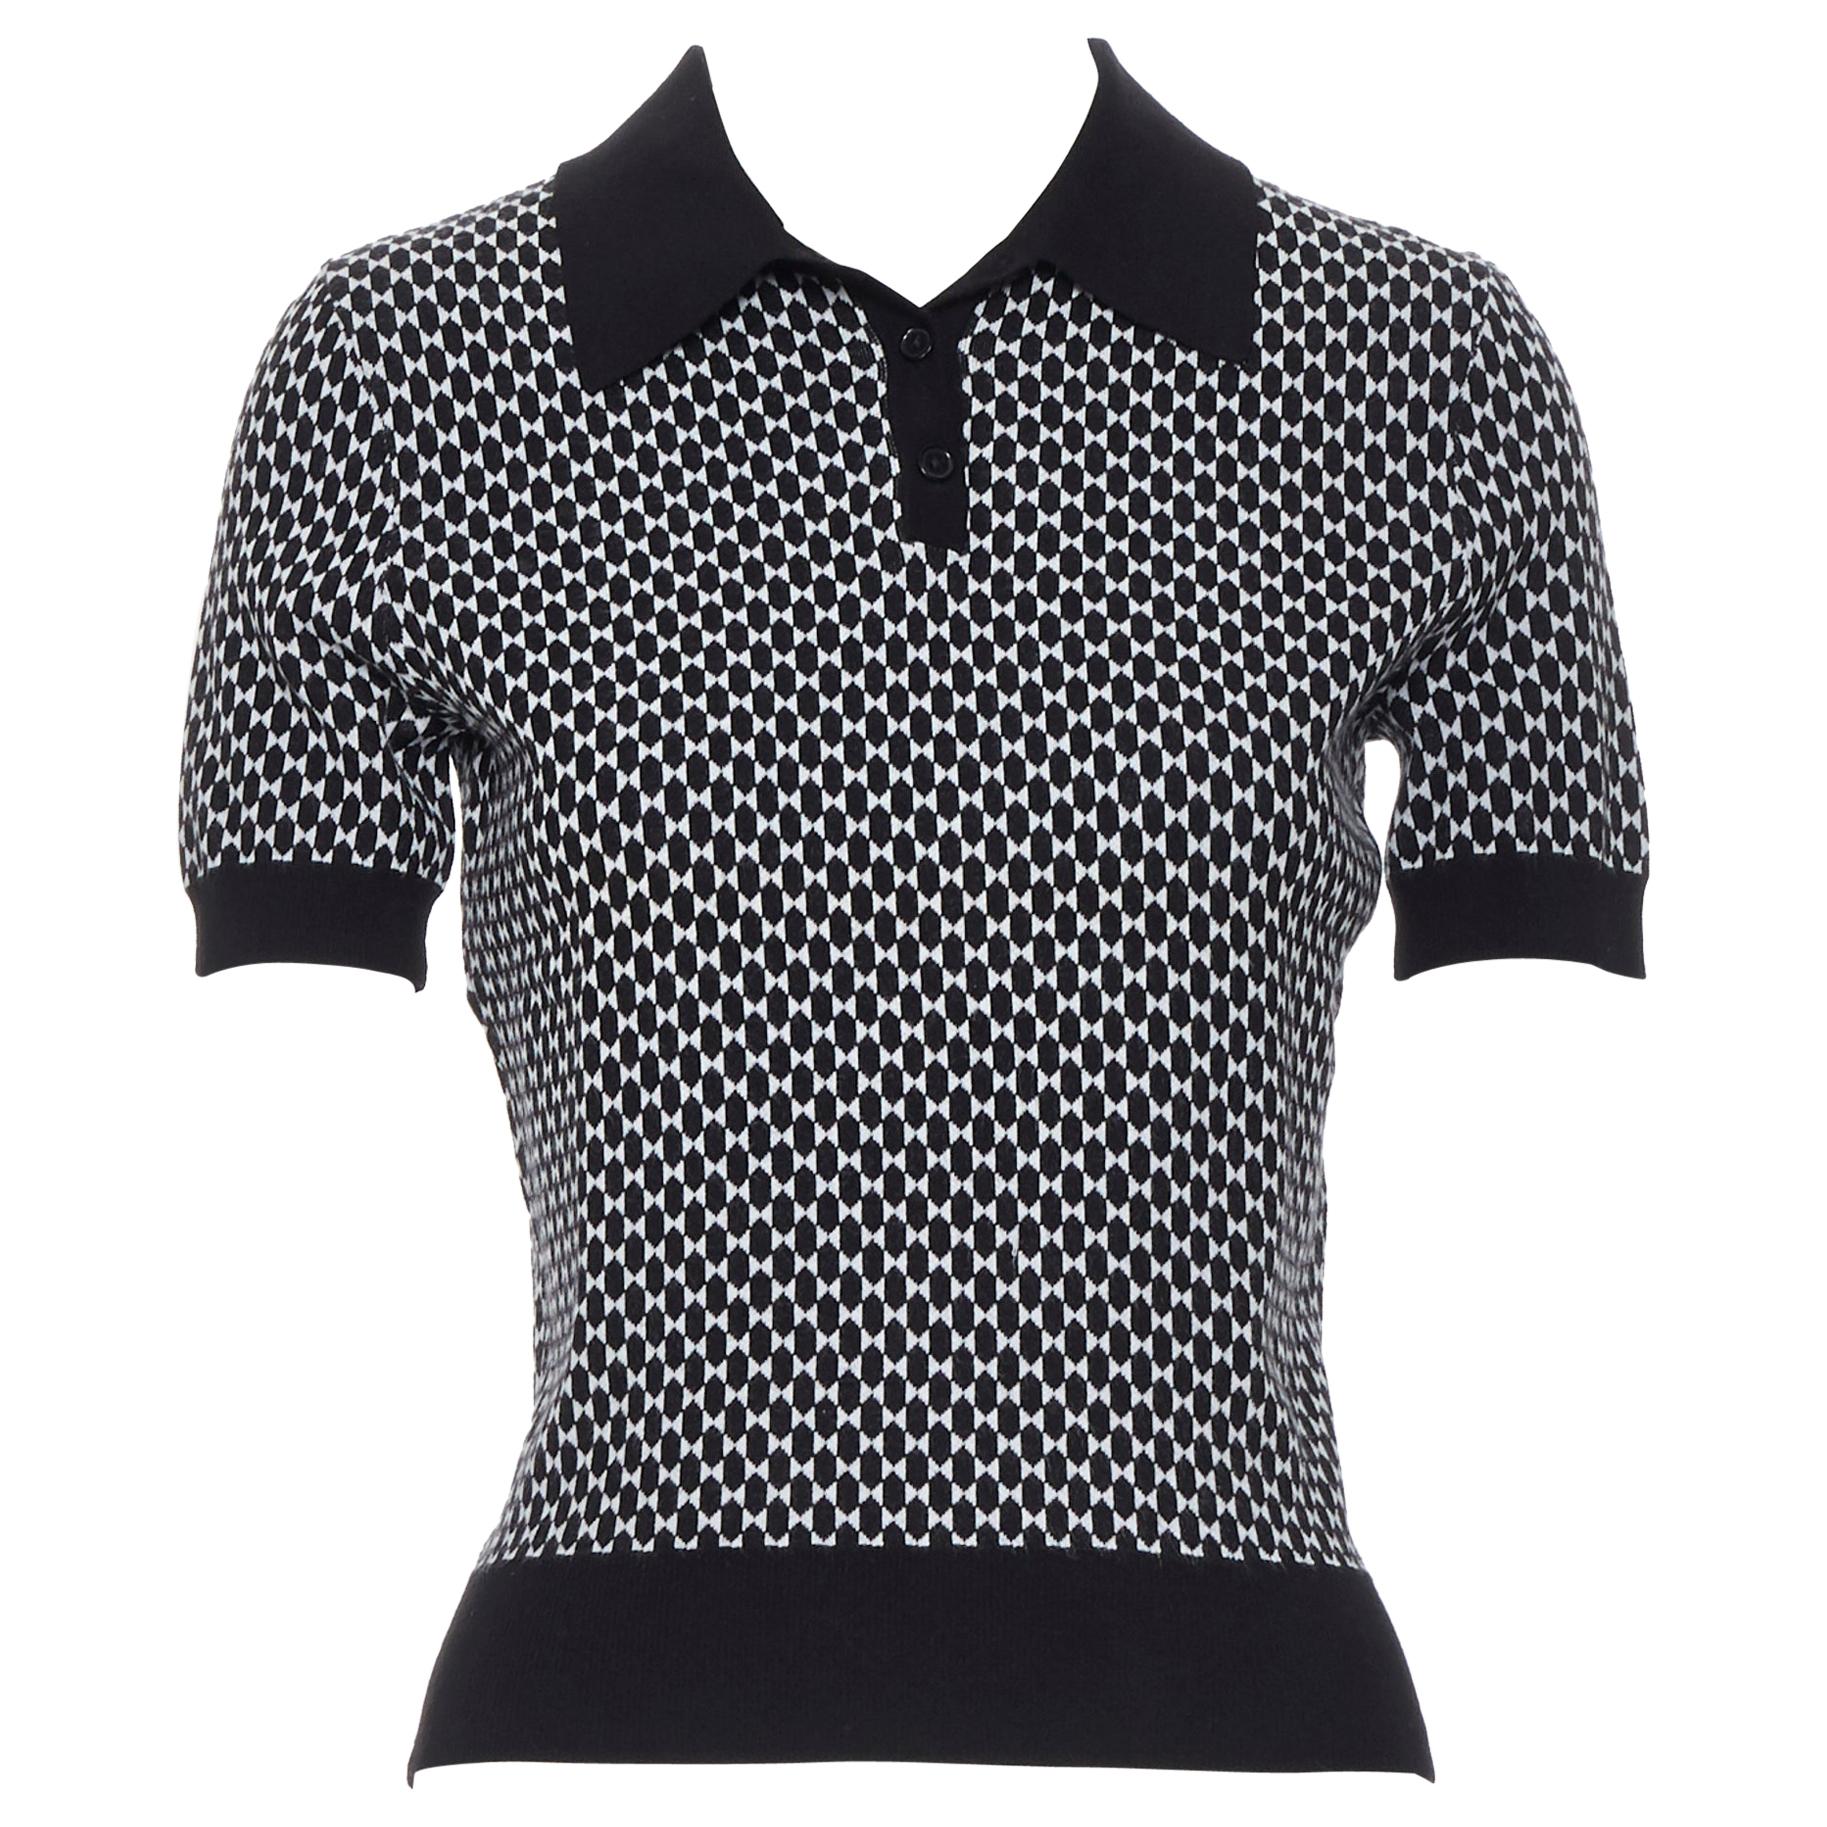 MICHAEL KORS COLLECTION black white geometric stretch knit polo shirt top XS